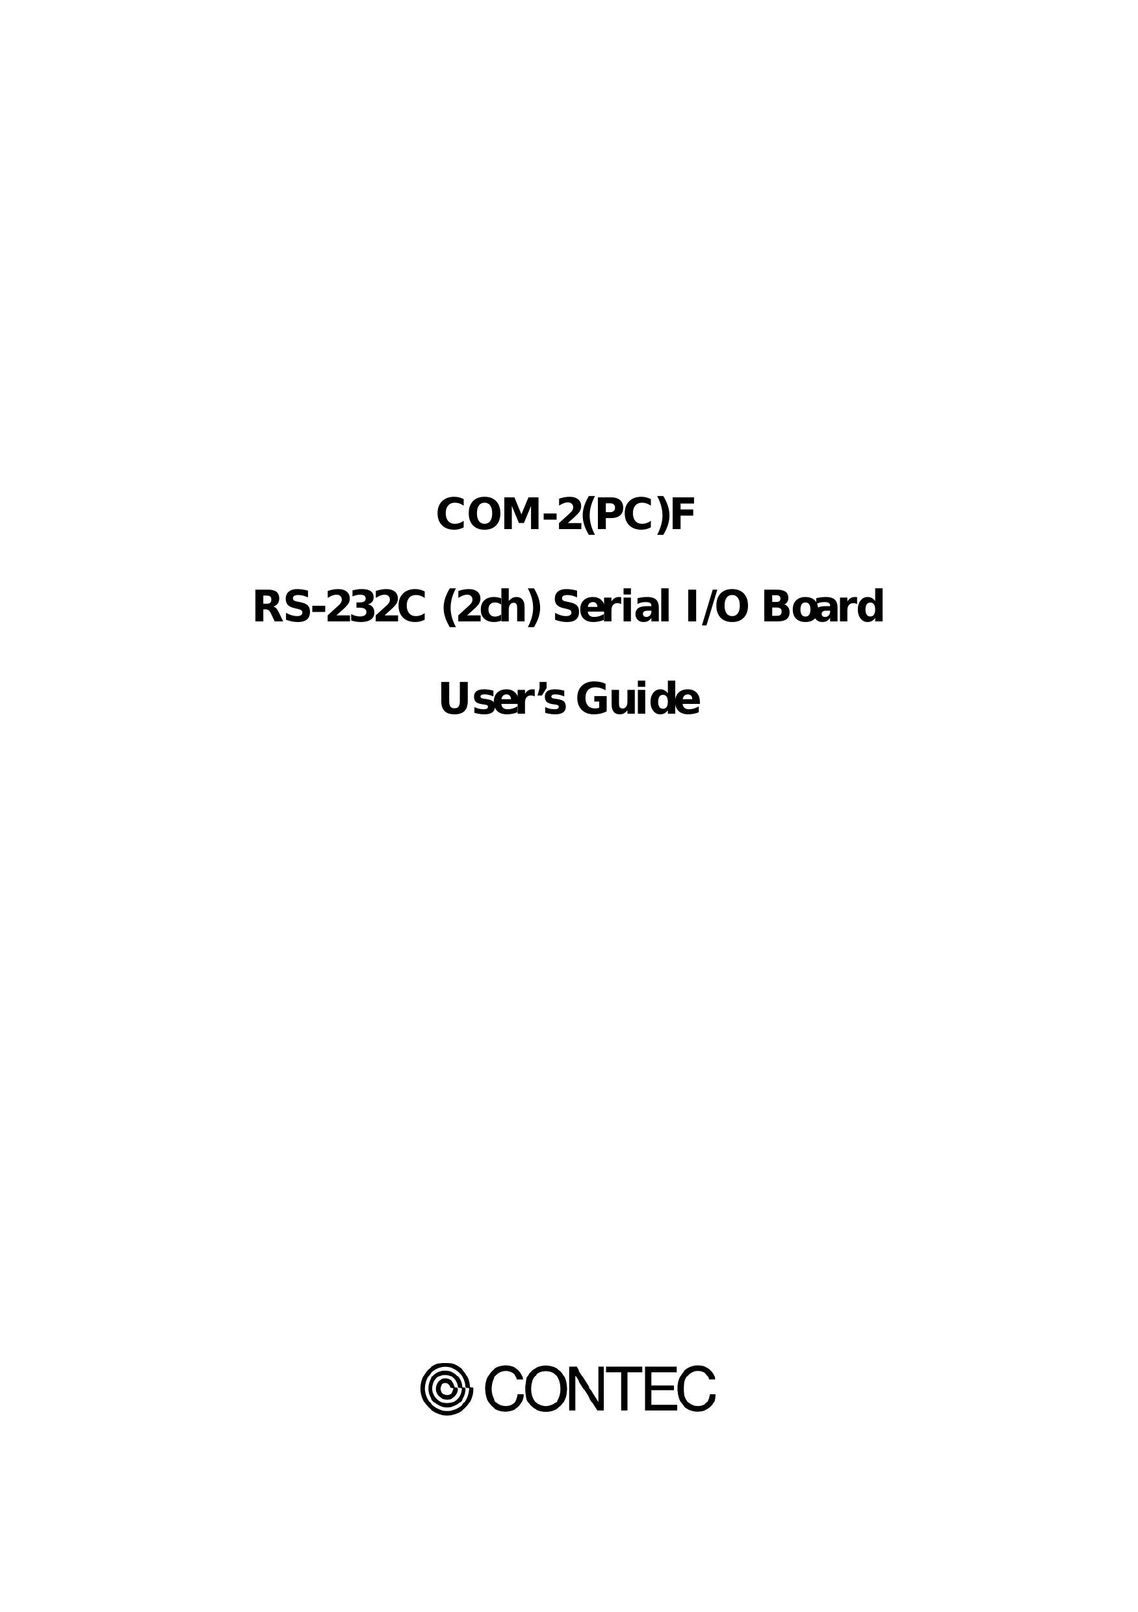 Compaq RS-232C Computer Hardware User Manual